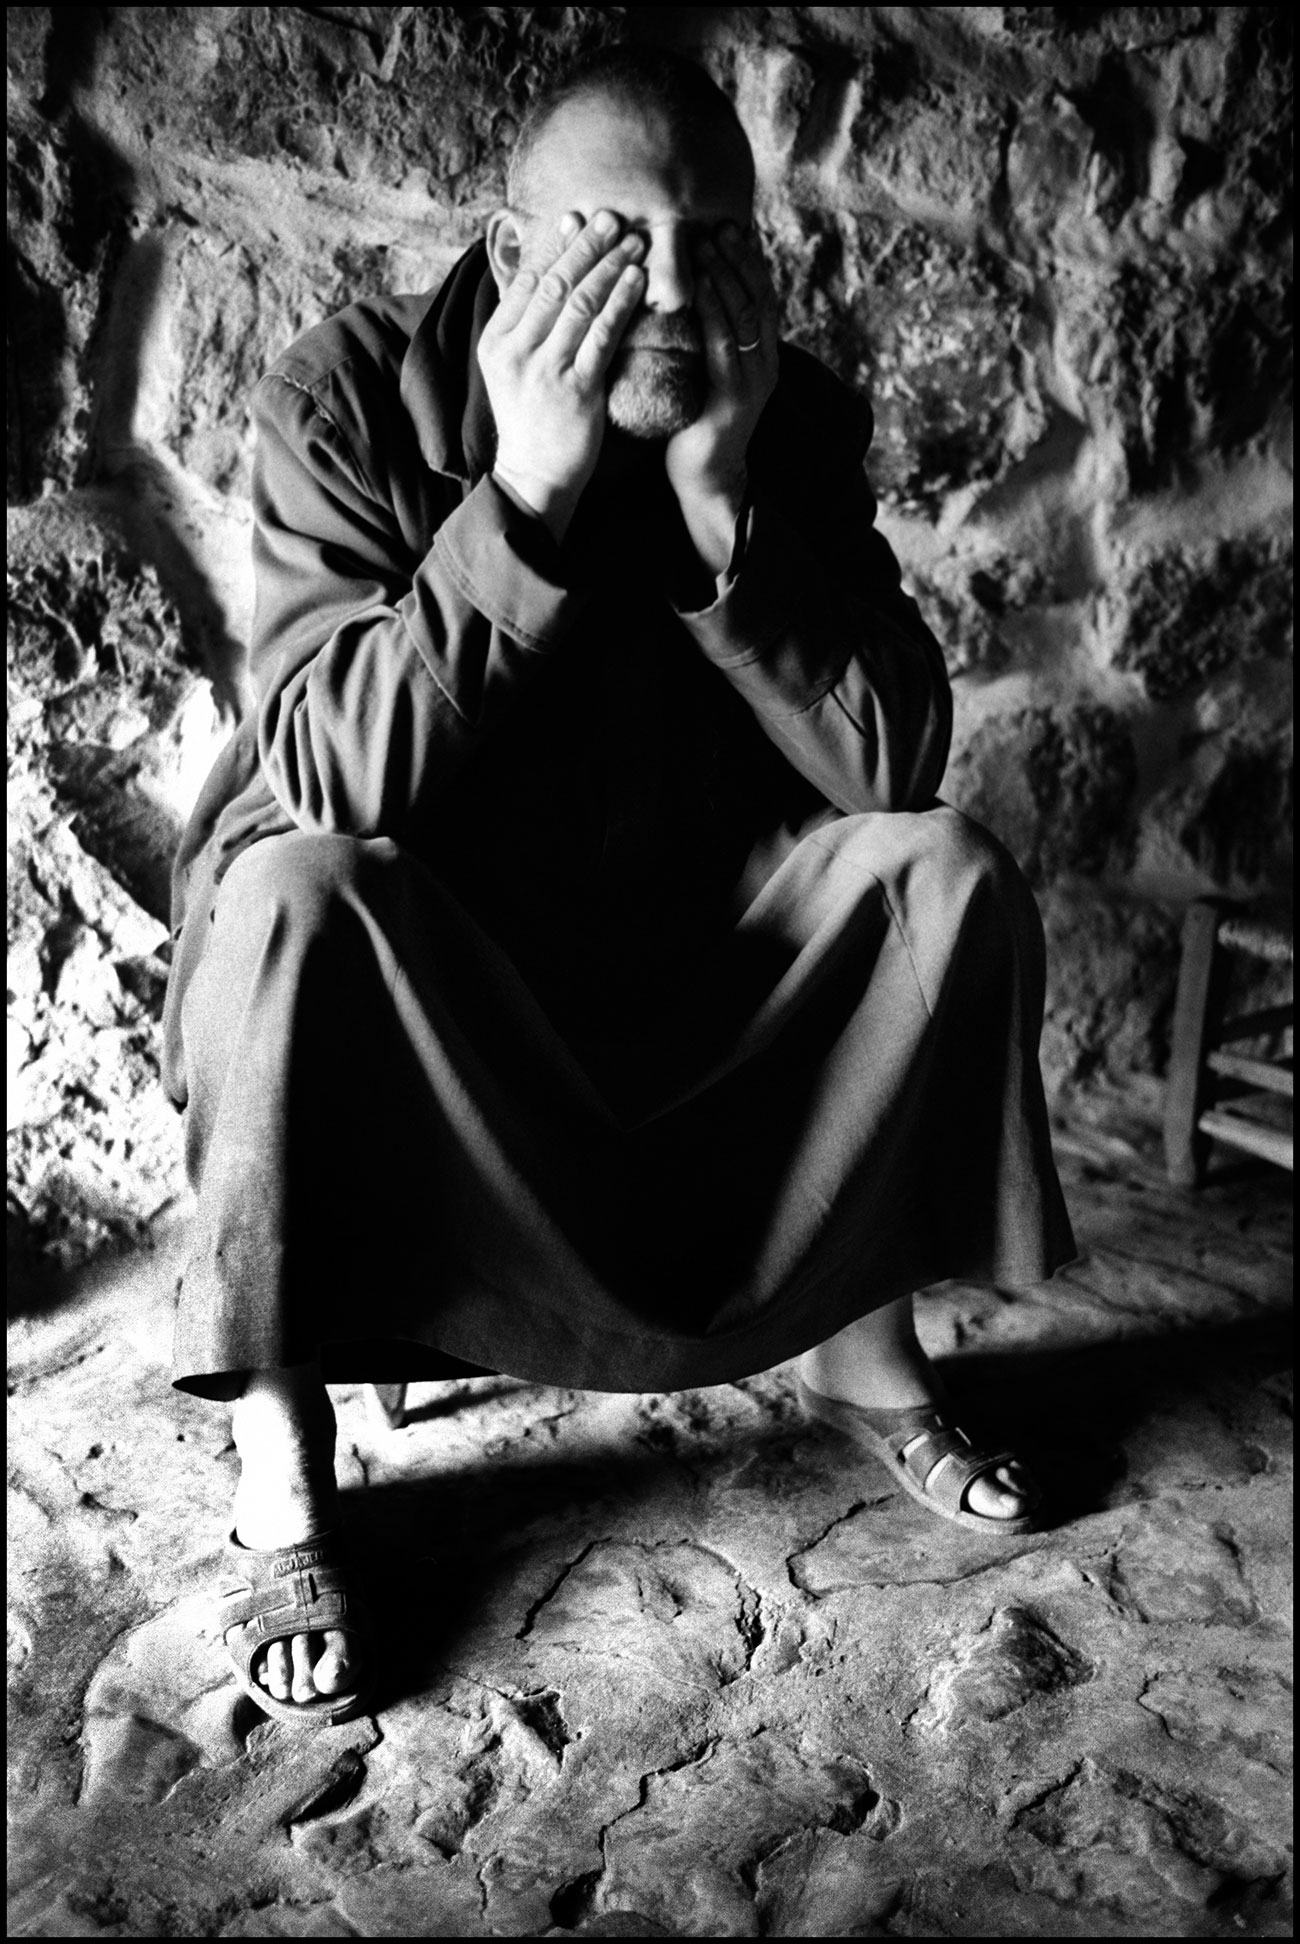 Paolo Dall’Oglio, Ivo Saglietti, Mar Mûsa, Syrie, 2004 © Ivo Saglietti Zeitenspiegel Agentur